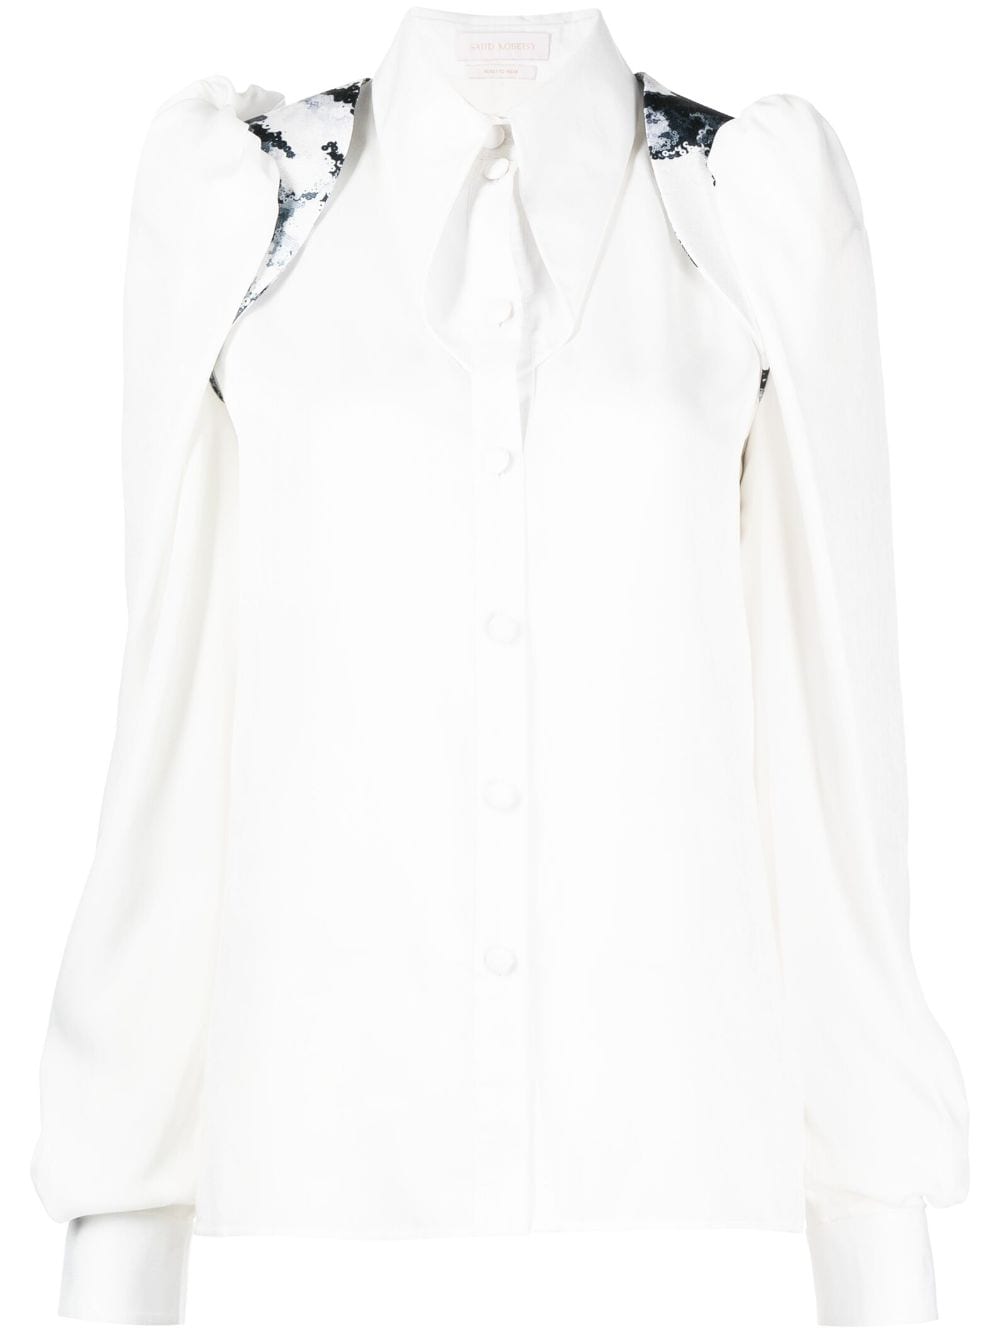 Saiid Kobeisy Oversized Pointed Collar Shirt - Farfetch